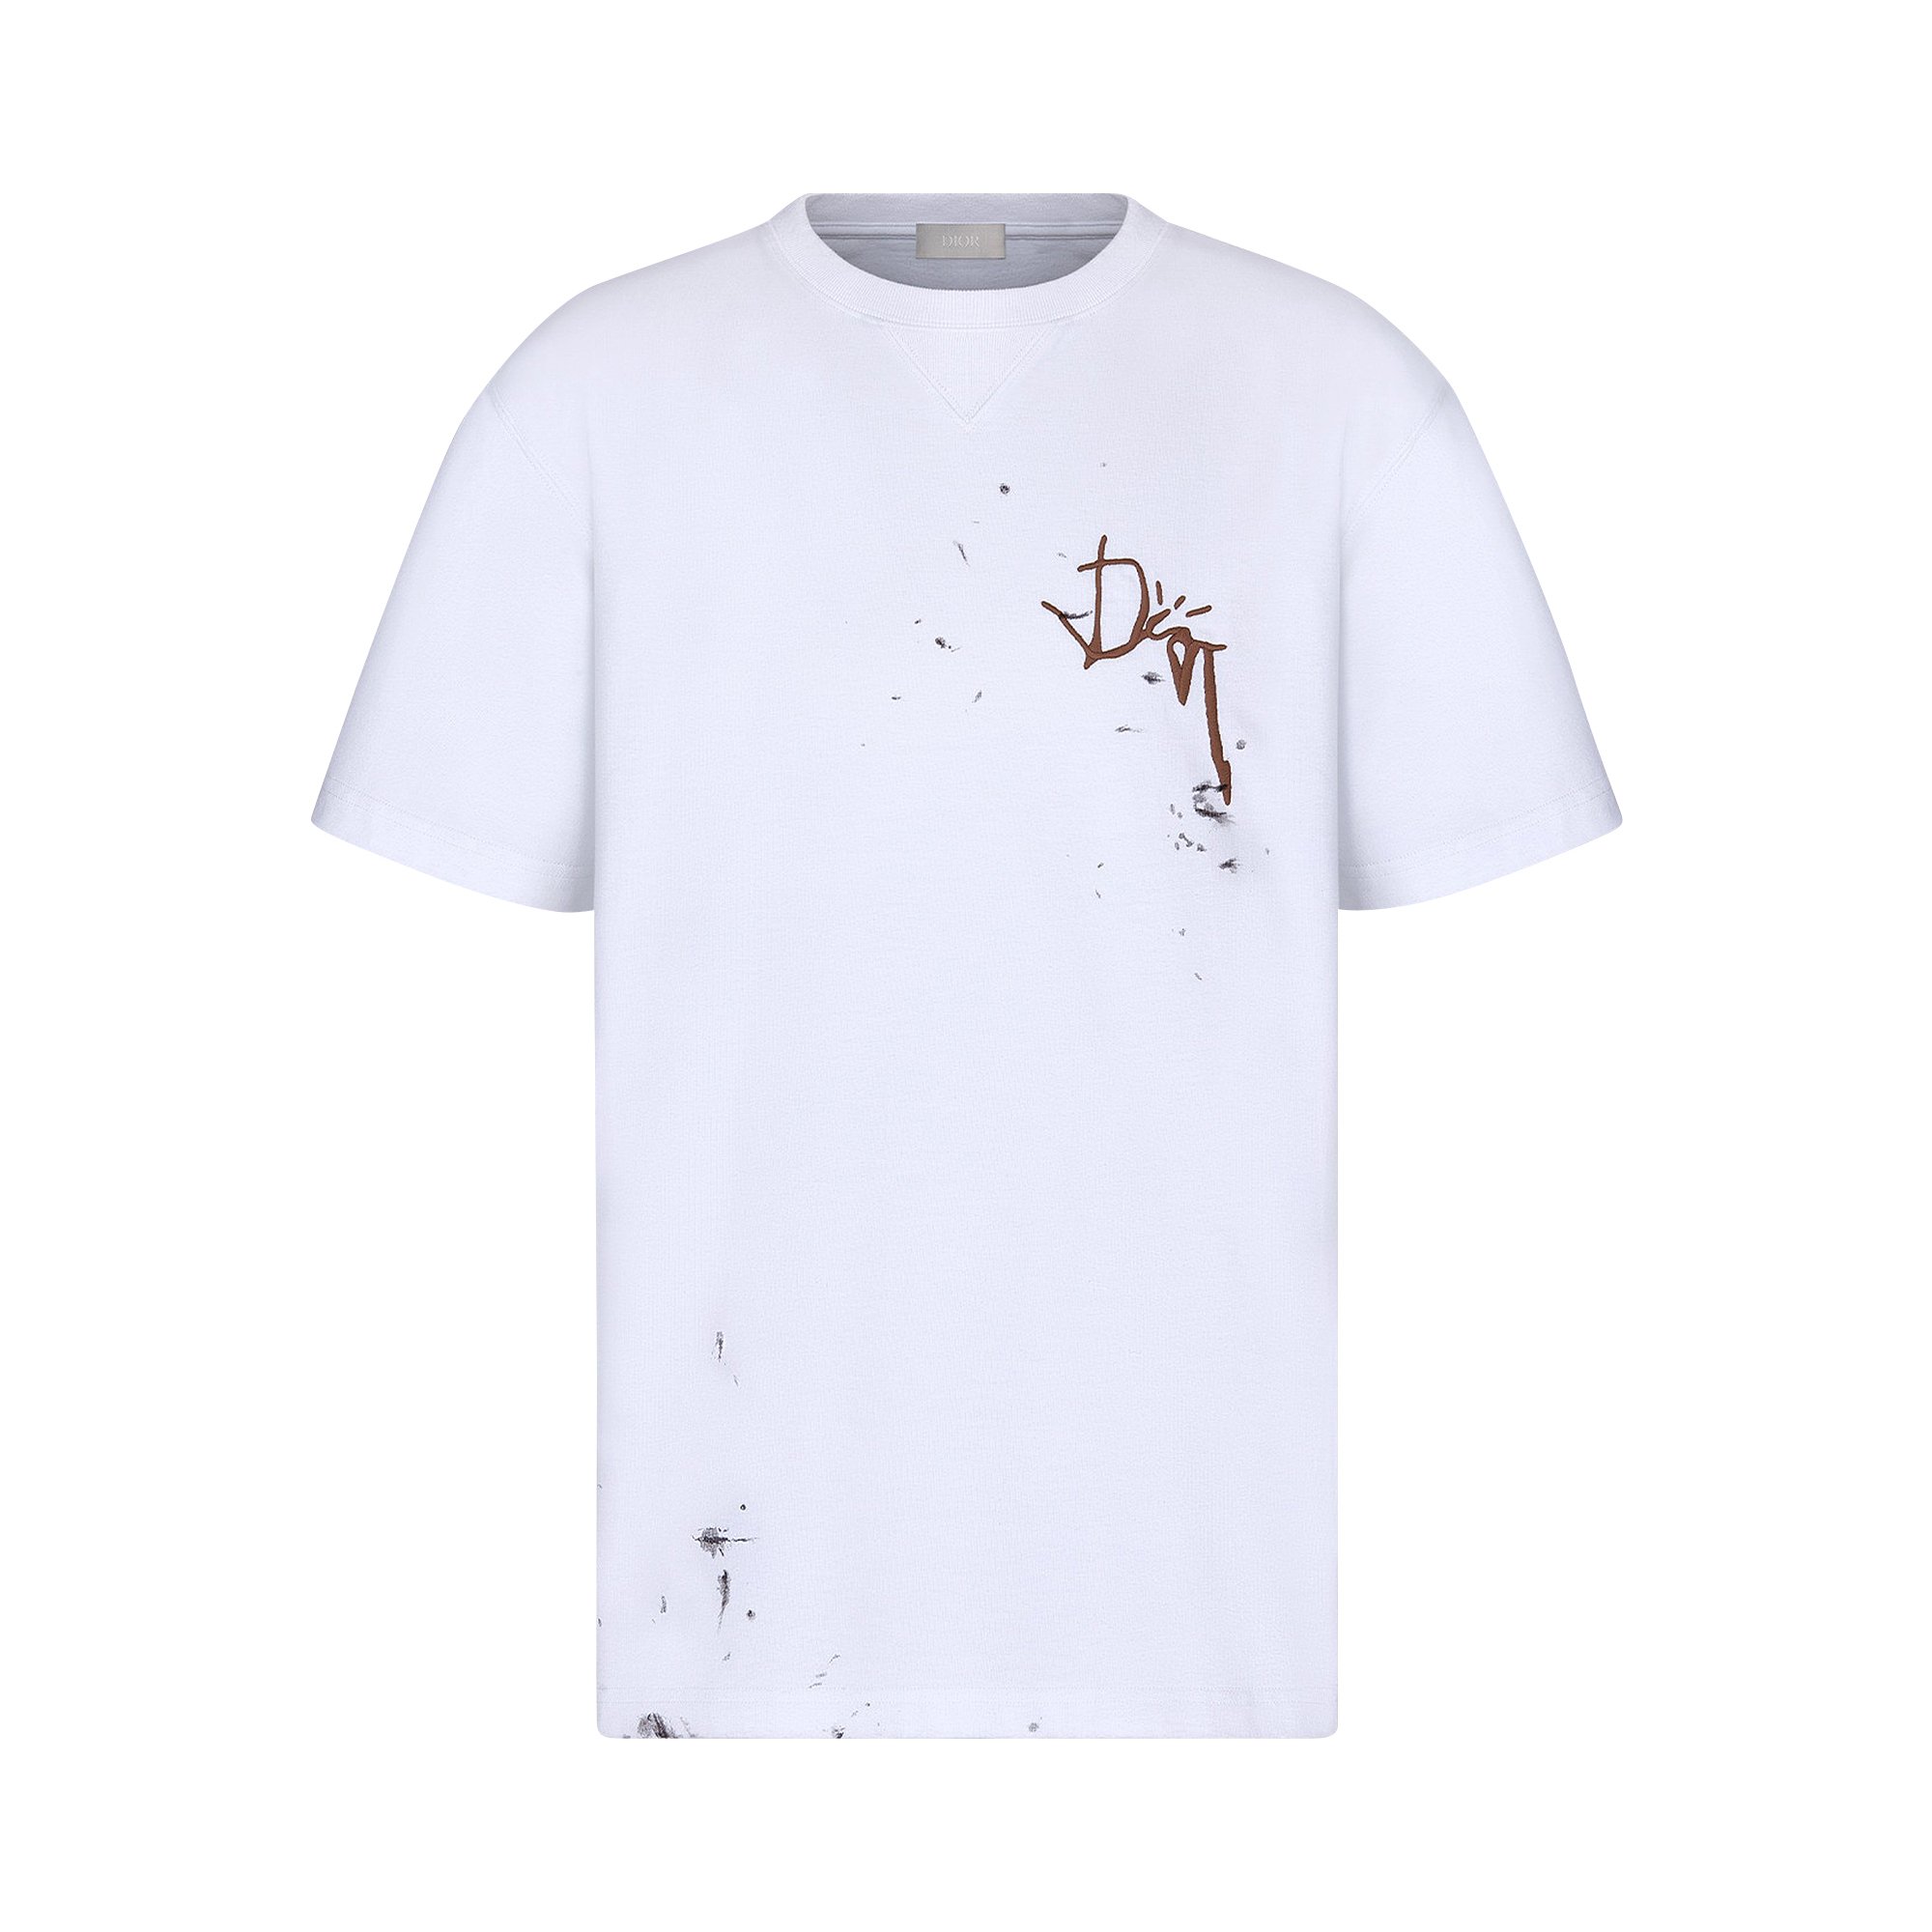 Buy Dior x Cactus Jack Oversized T-Shirt 'White' - 283J685B0554 